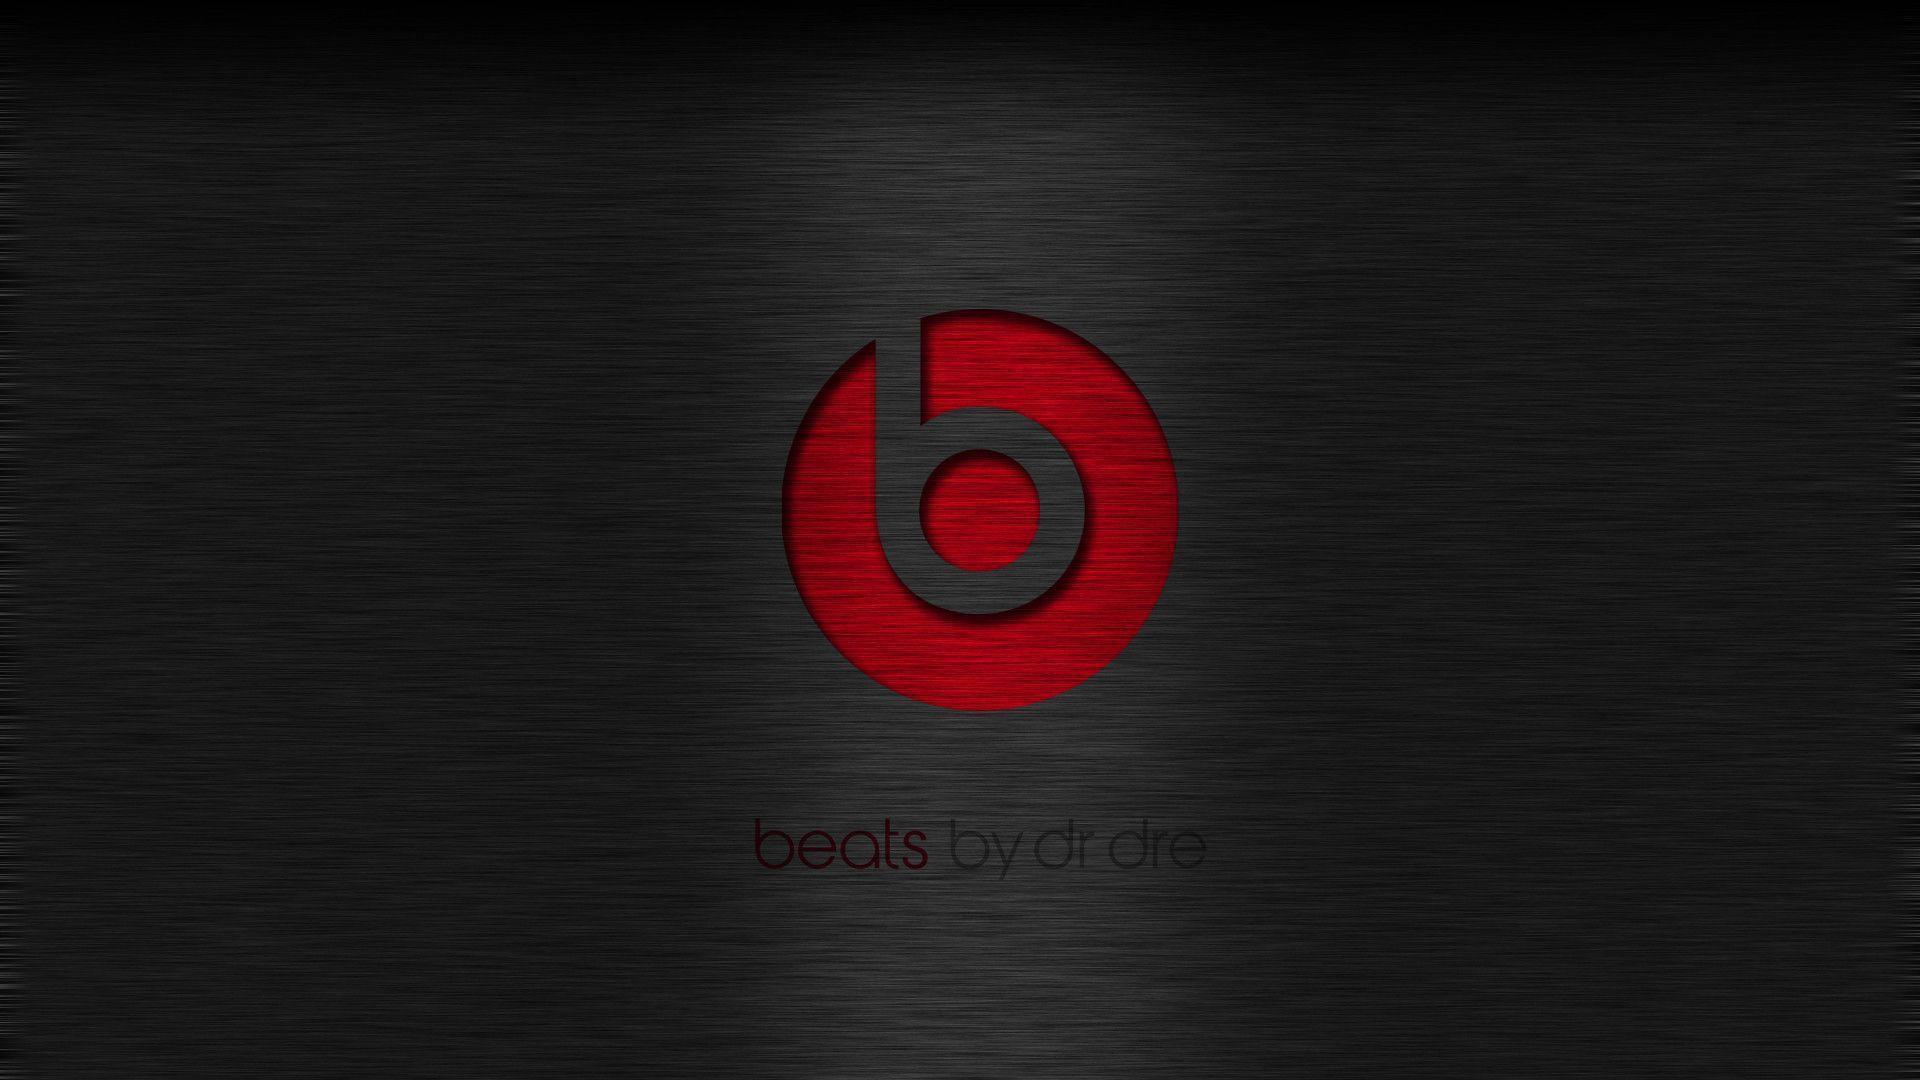 Beats By Dre Image Wallpaper HD